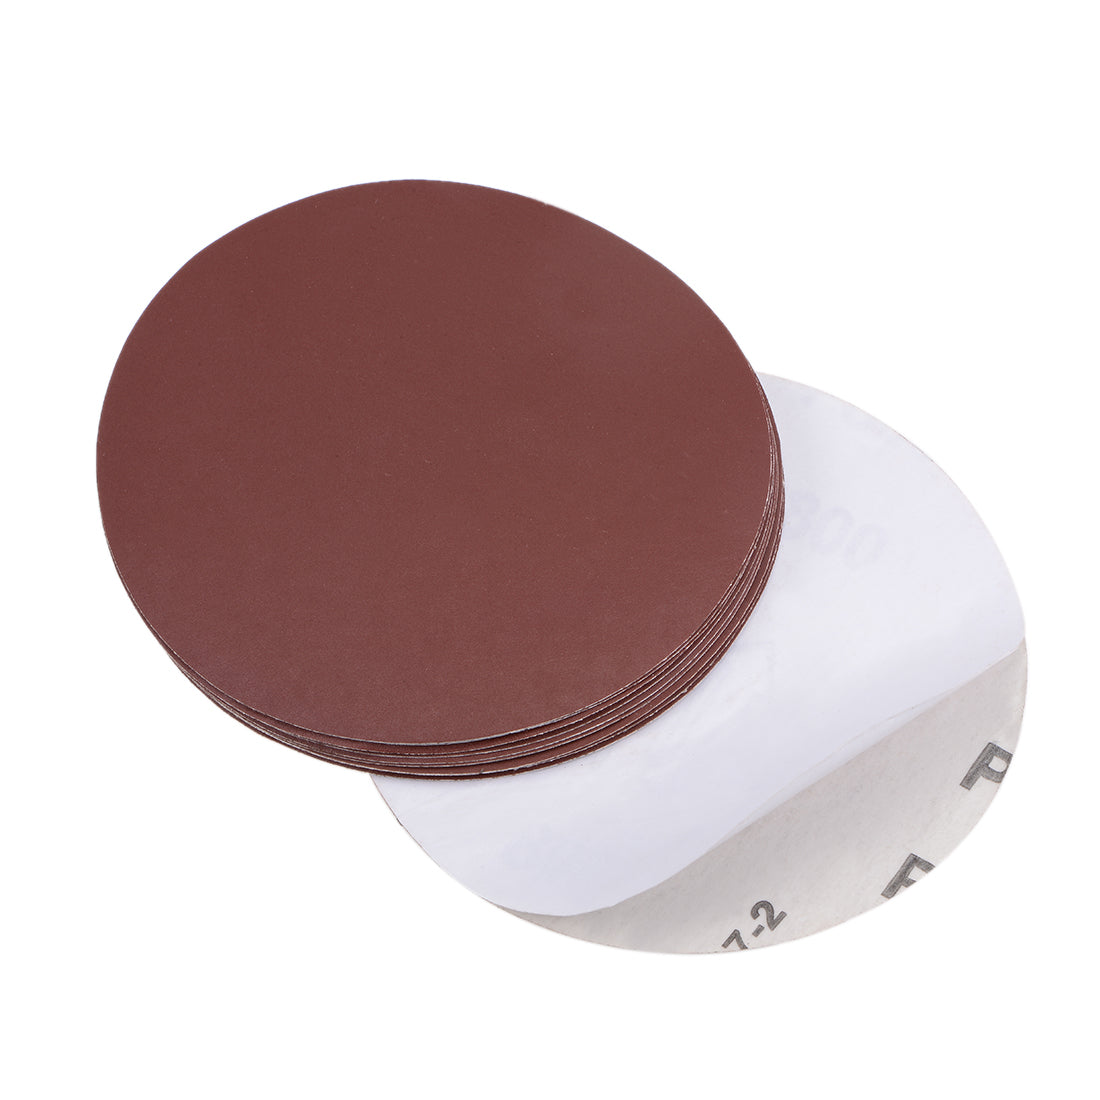 uxcell Uxcell 5-Inch PSA Sanding Disc Aluminum Oxide Adhesive Back Sandpaper 800 Grit 10 Pcs